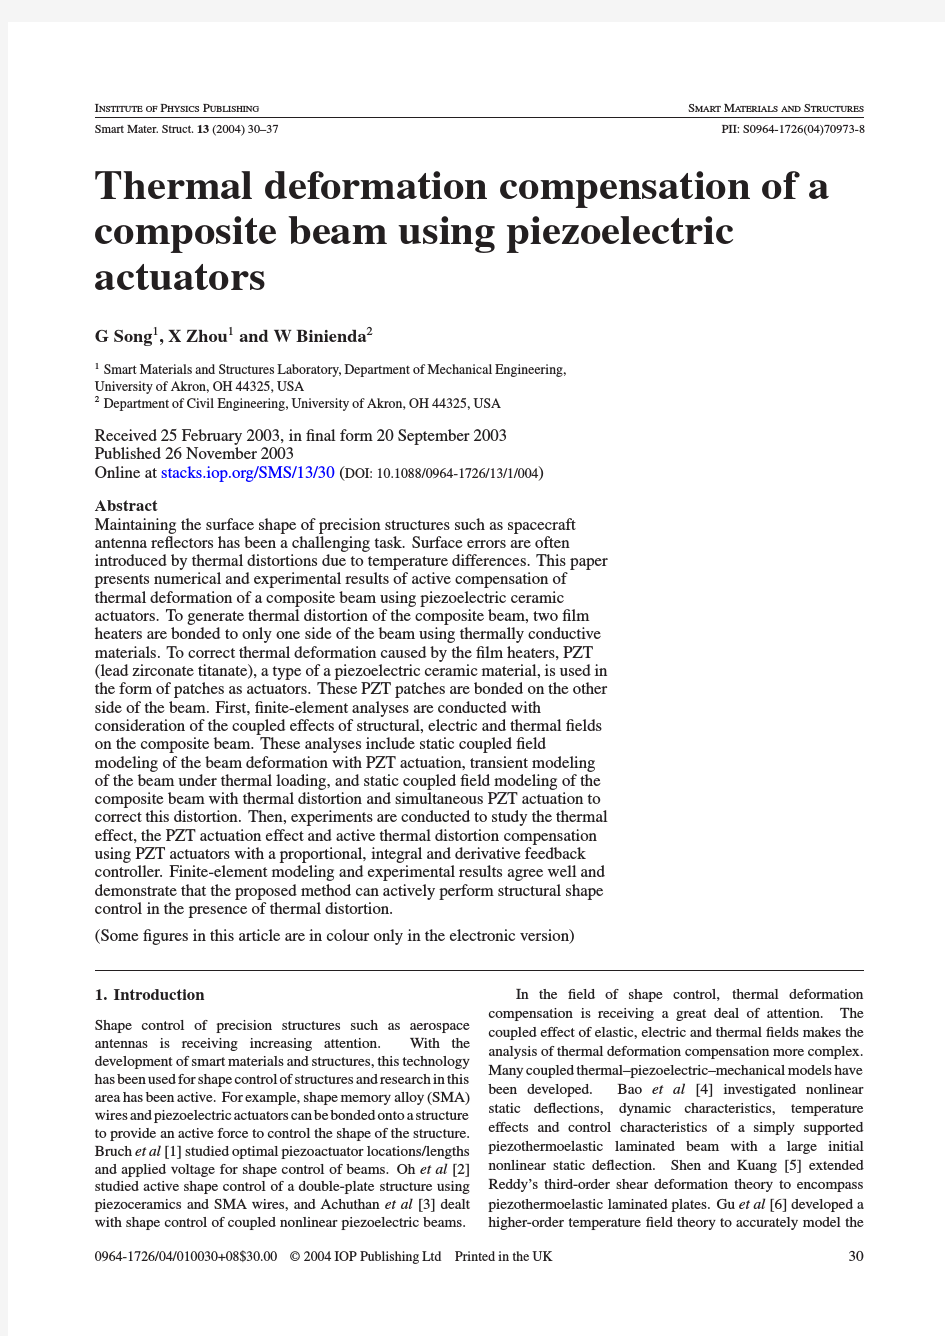 Thermal deformation compensation of a composite beam using piezoelectric actuators